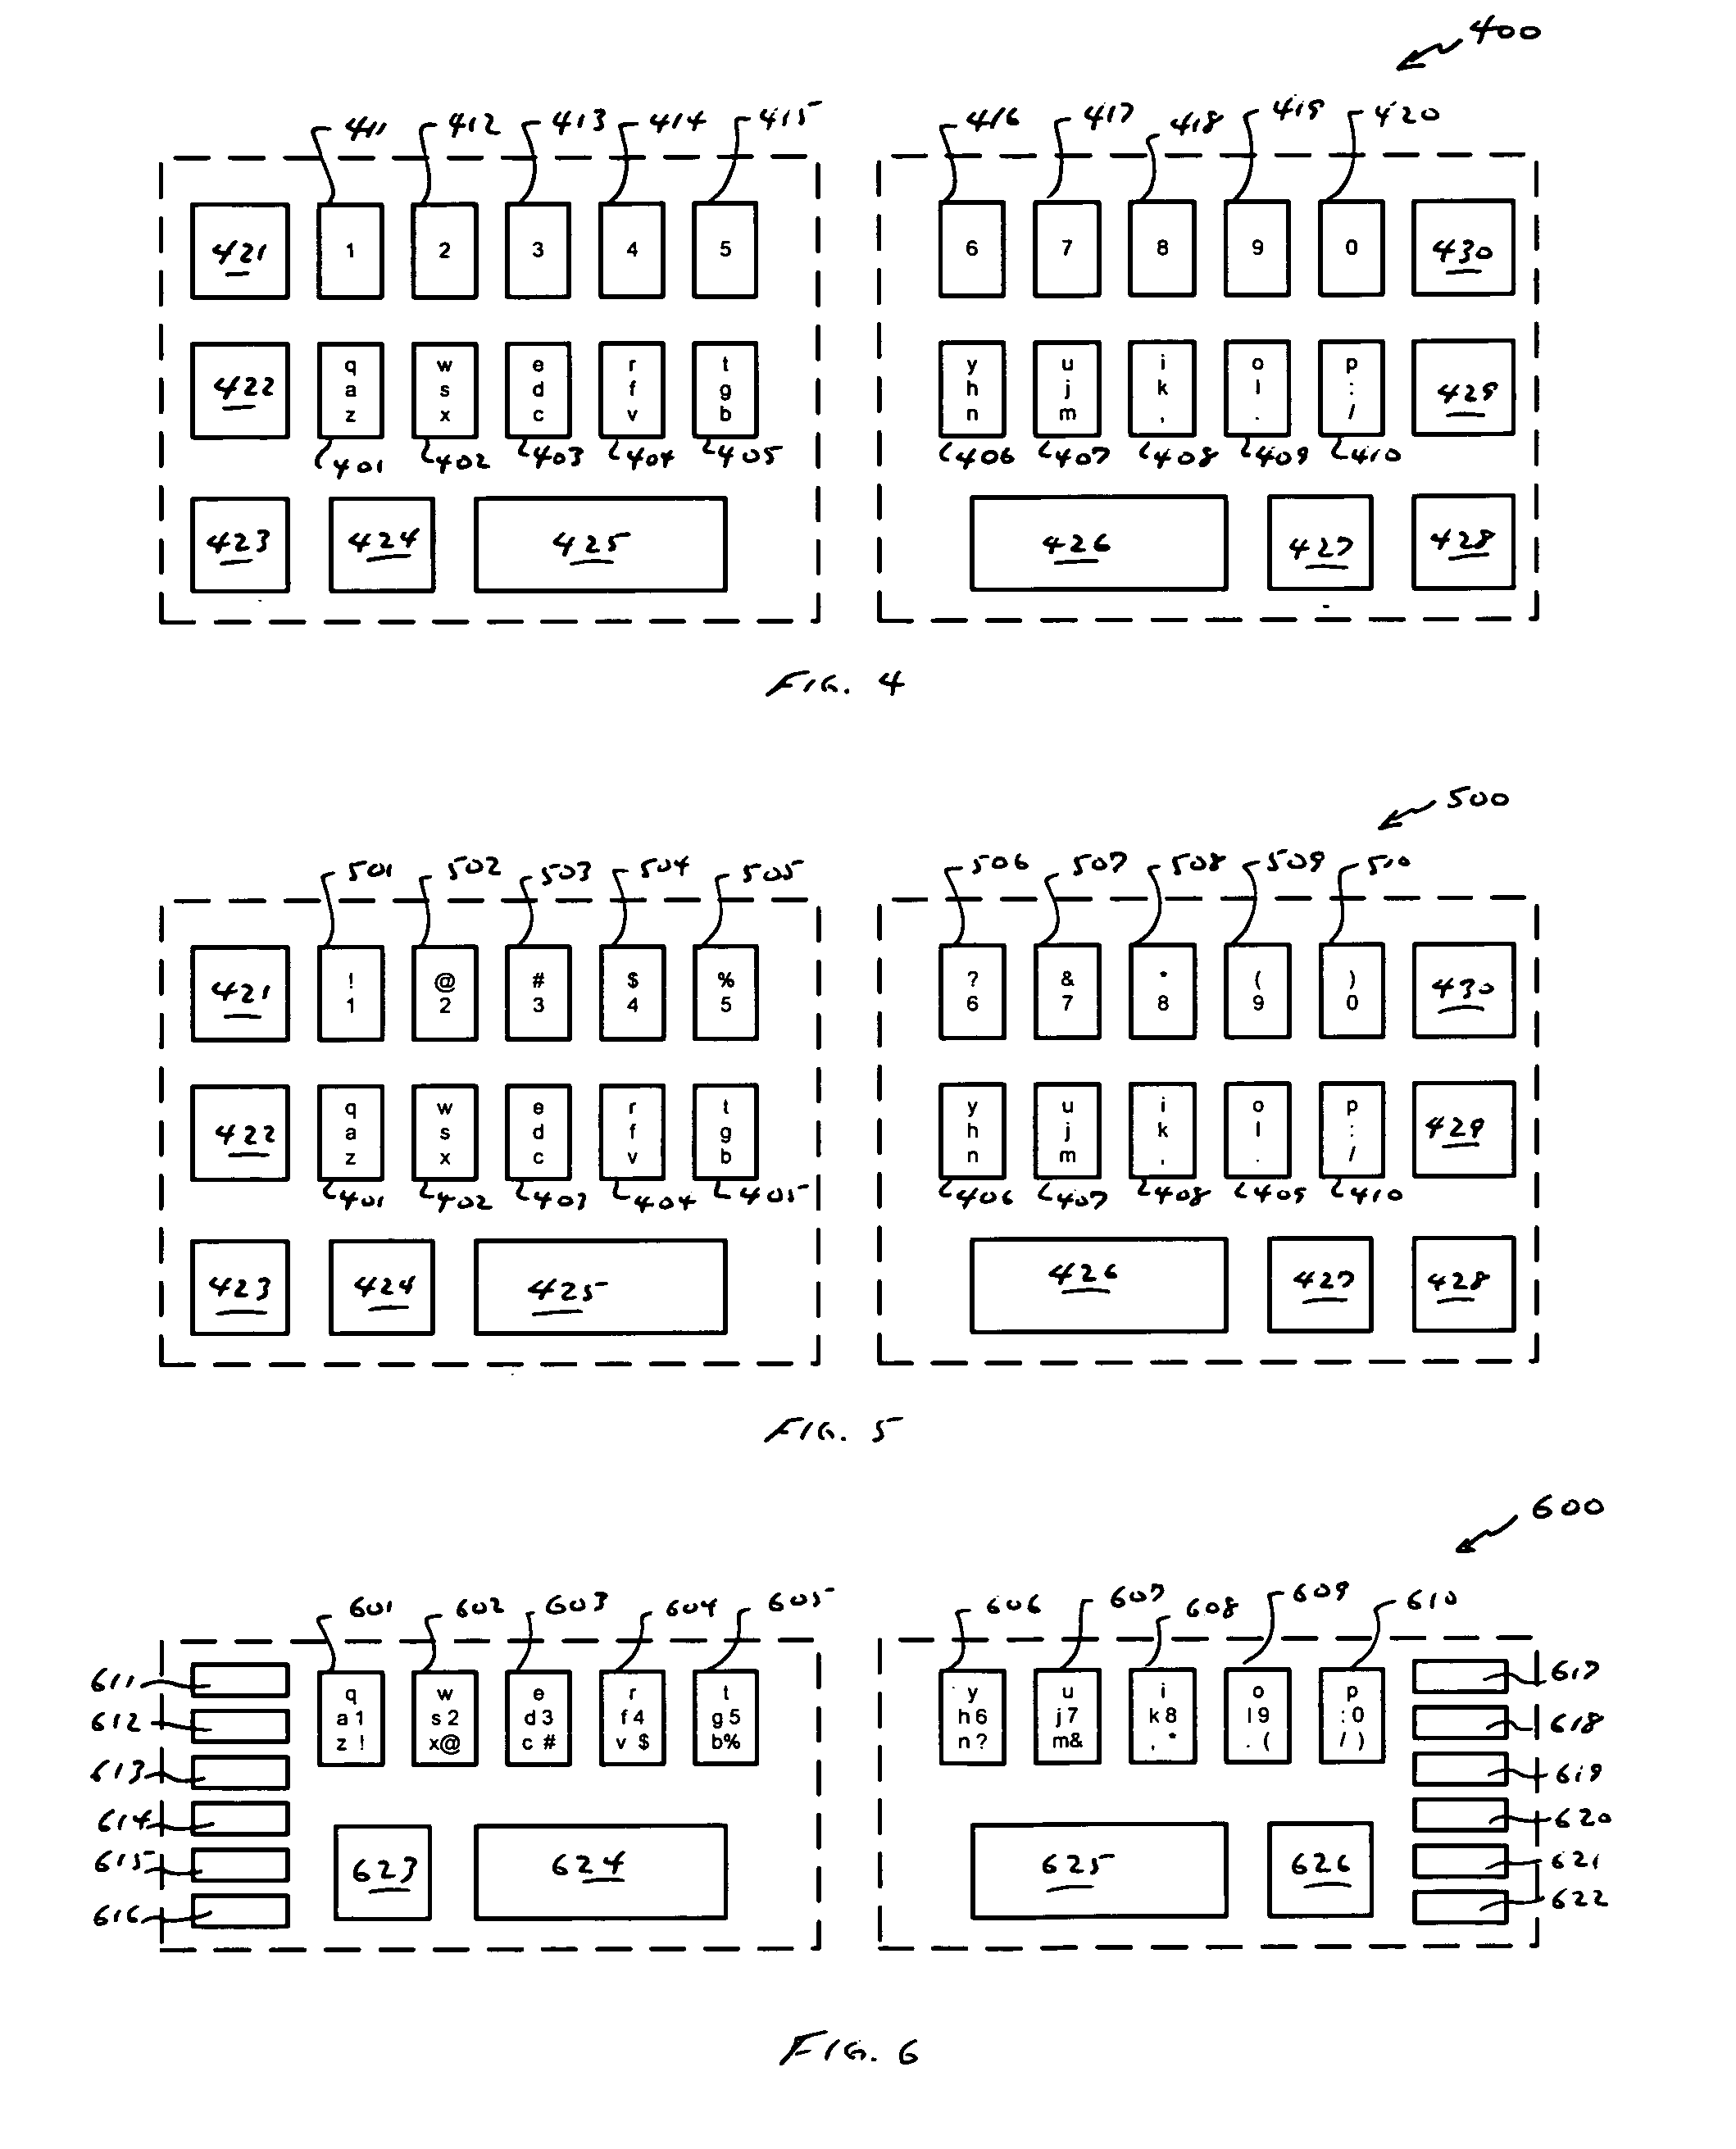 Compressed standardized keyboard